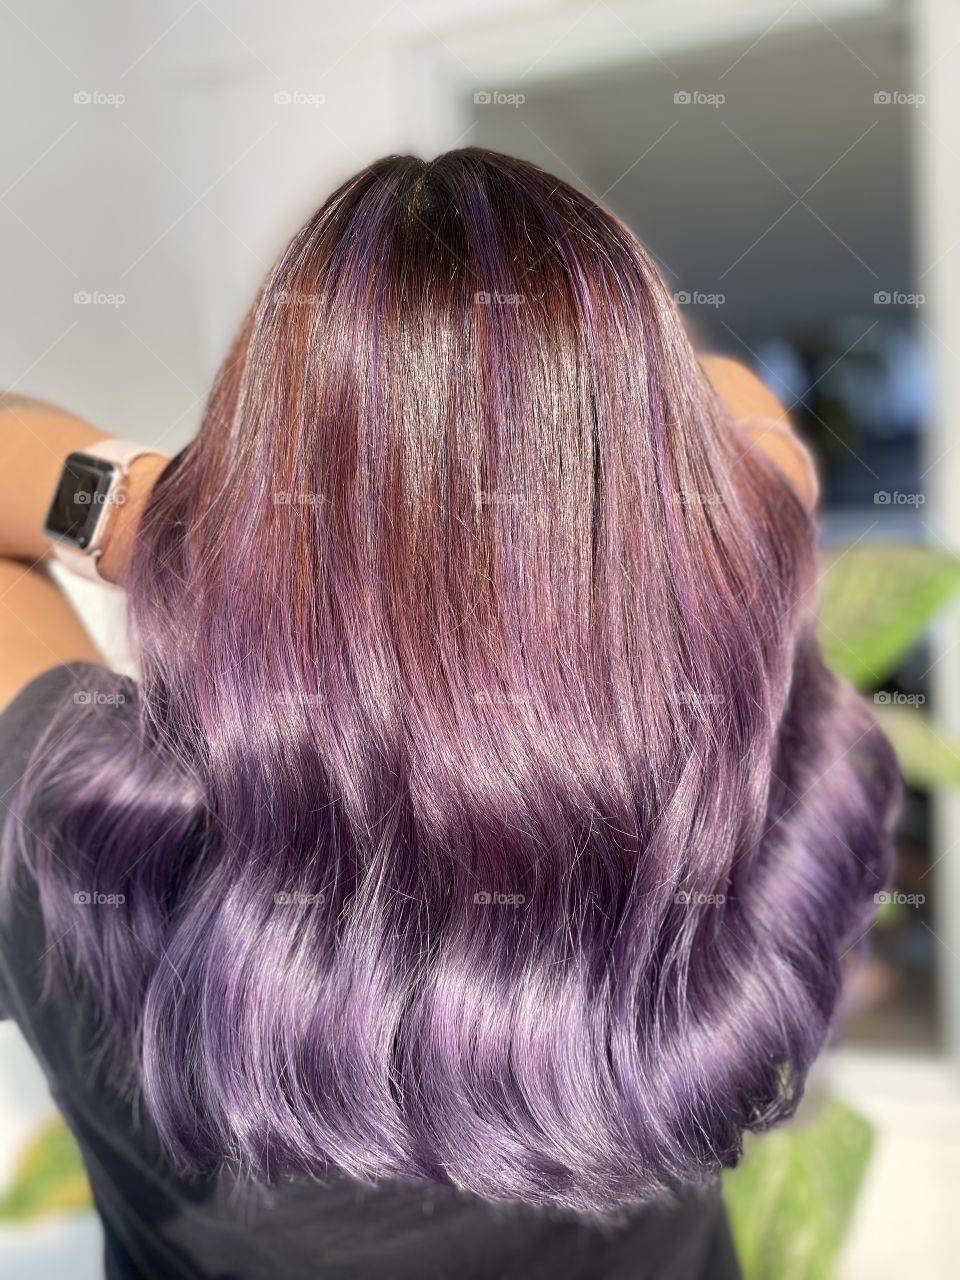 Royal purple 🌸